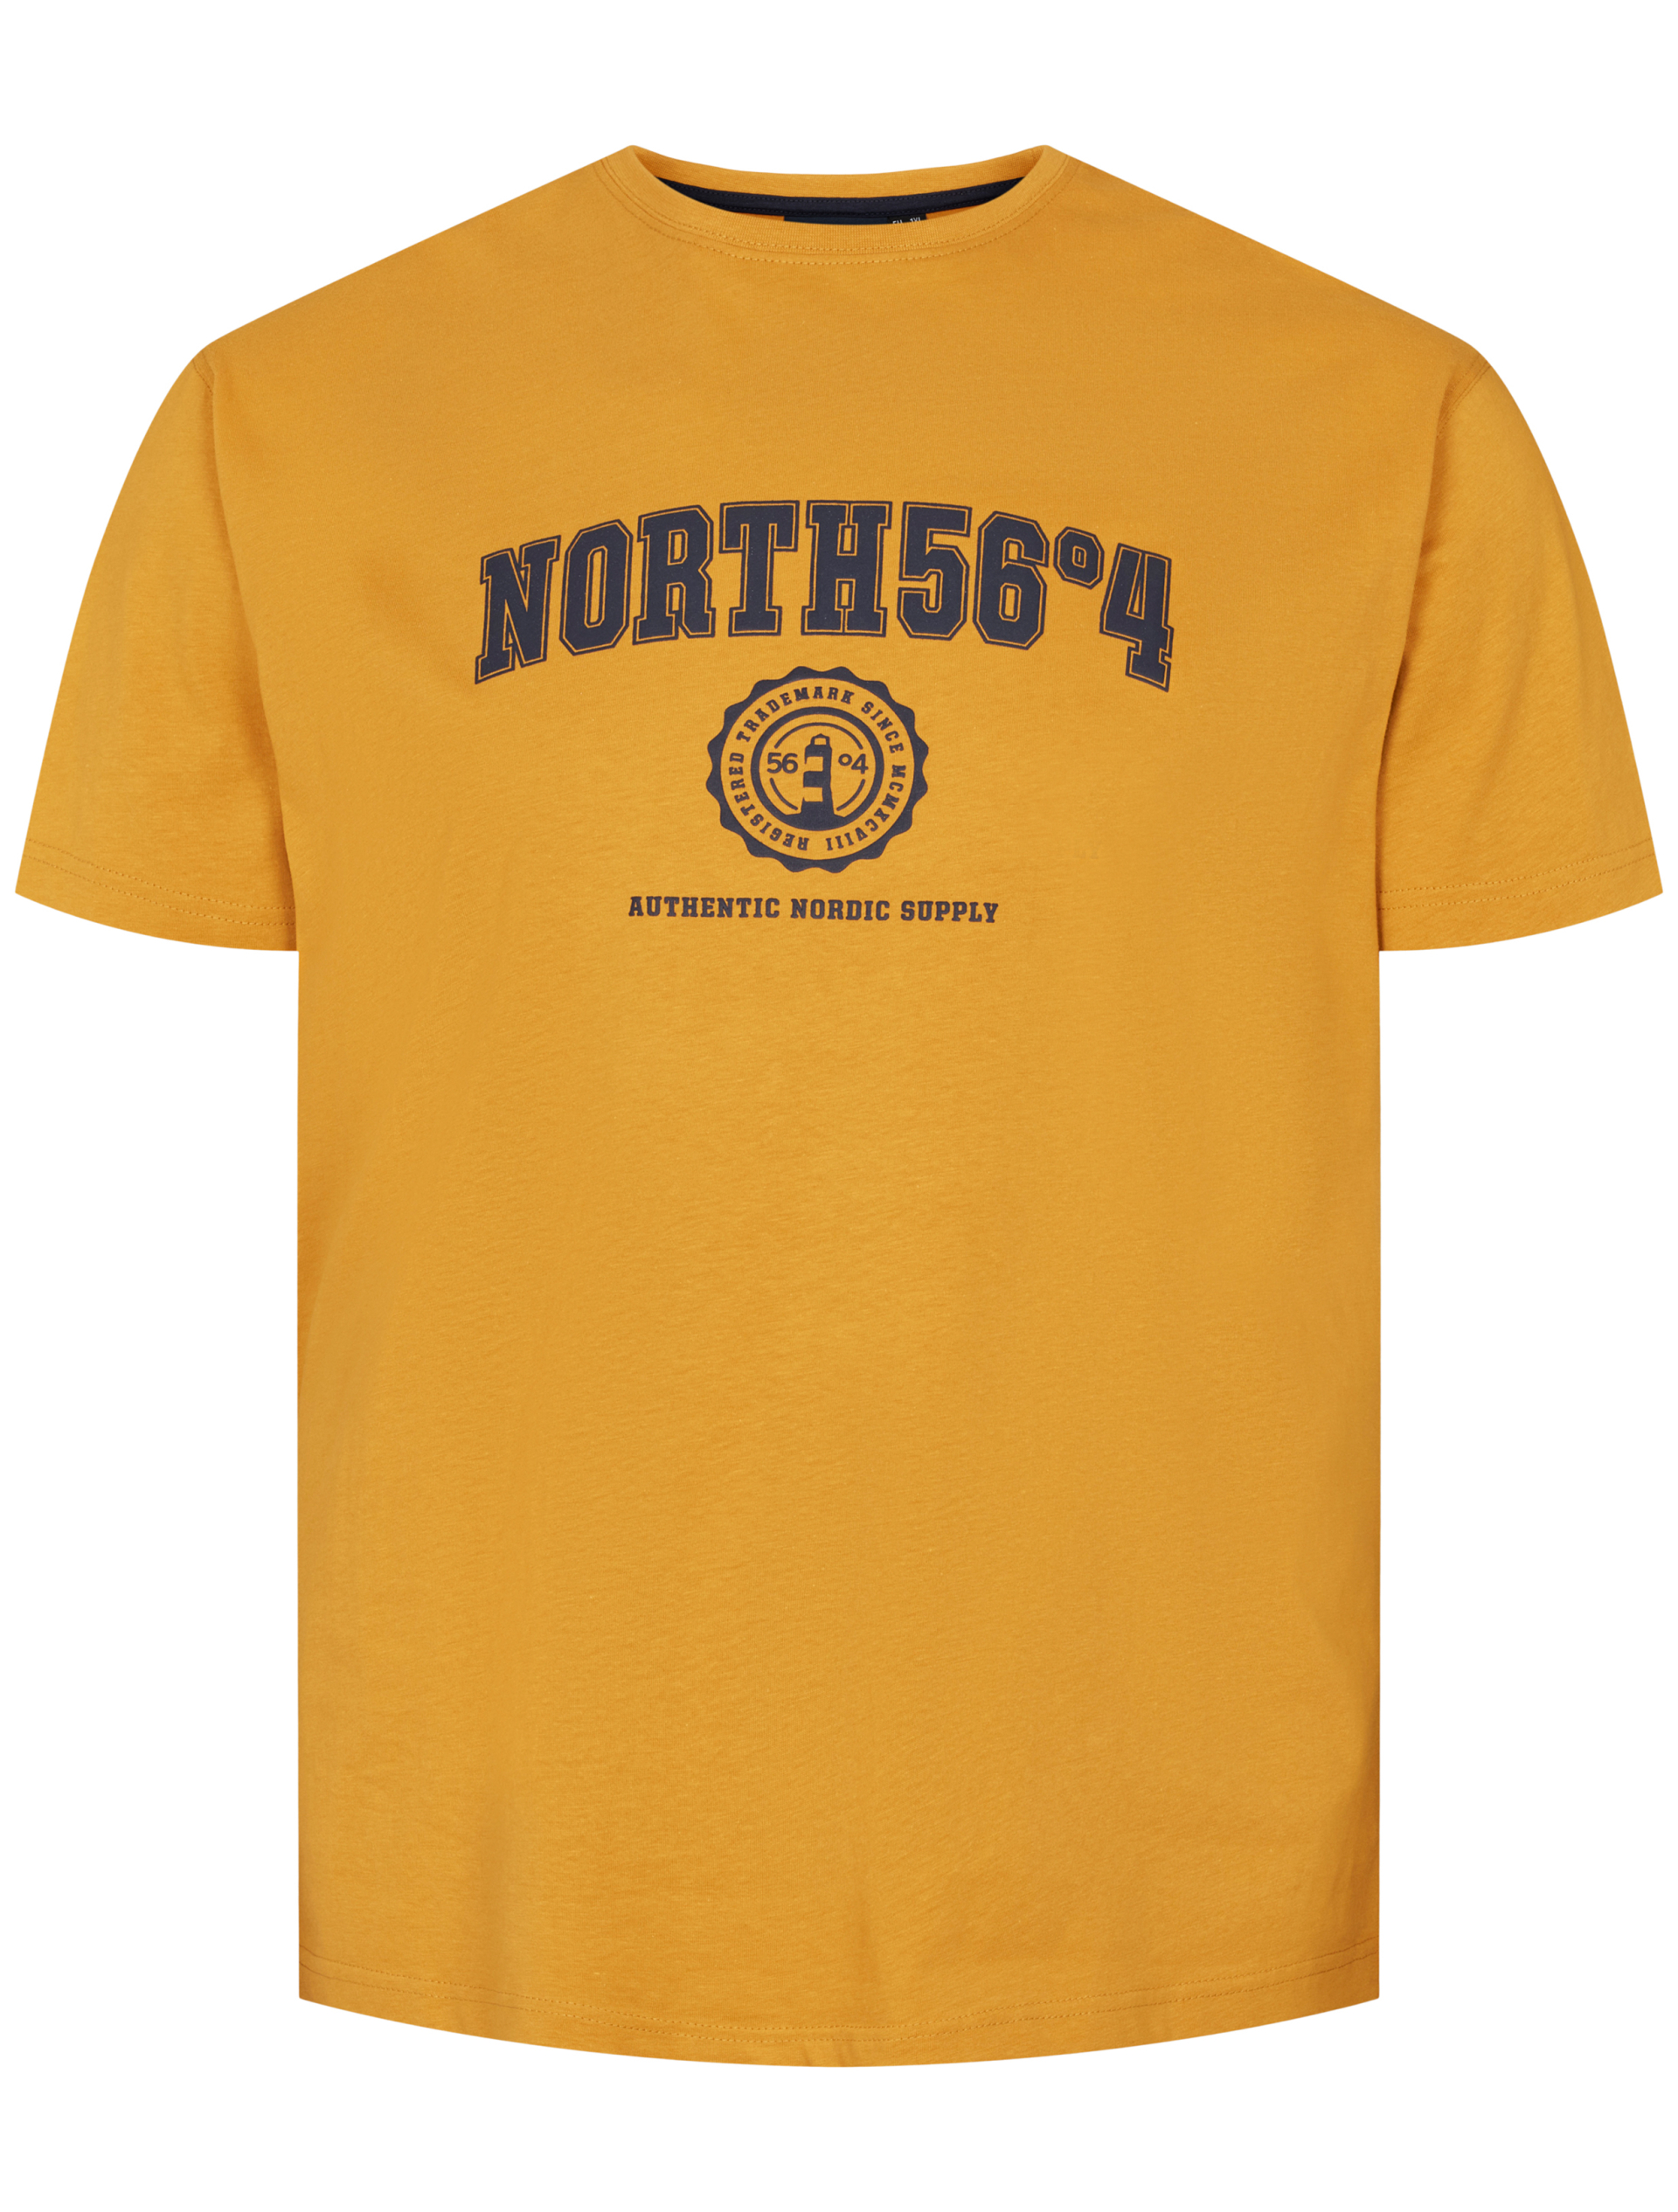 North T-shirt orange / 403 harvest gold